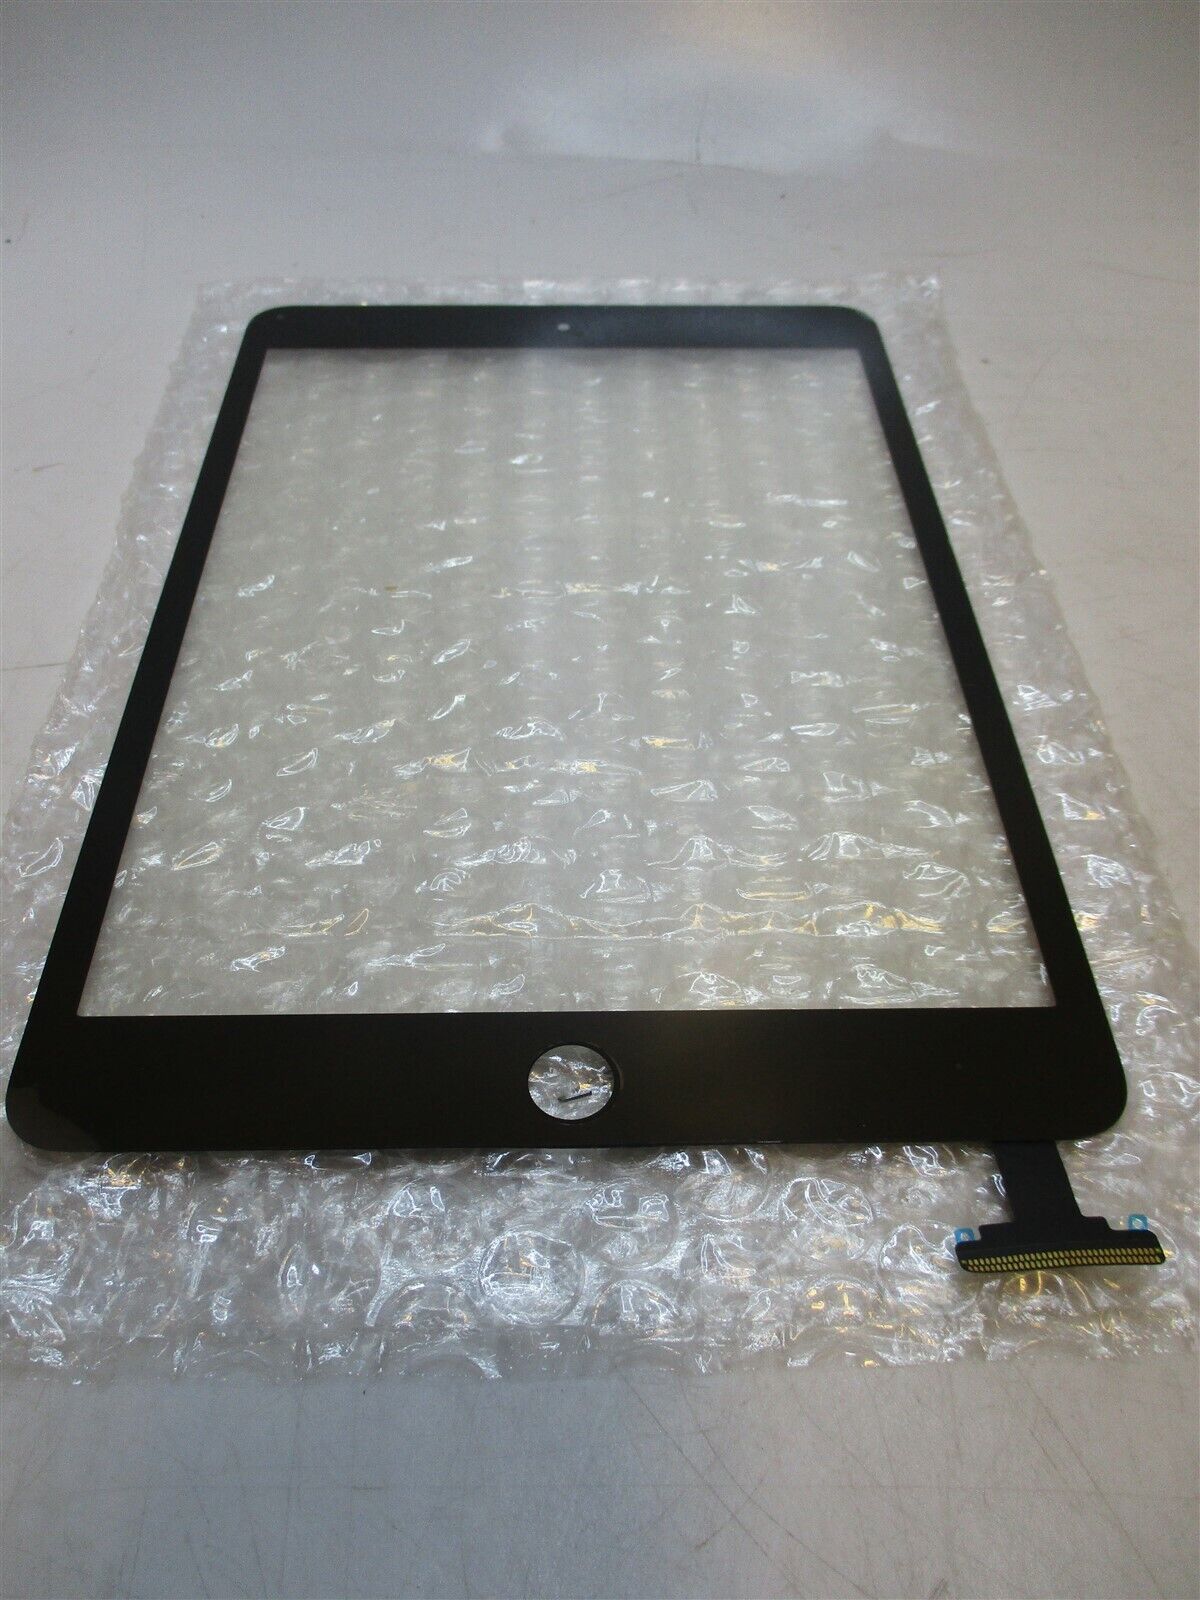 MCM Electronics (68-235) Digitizer Screen Assembly for Black iPad Mini Tablet